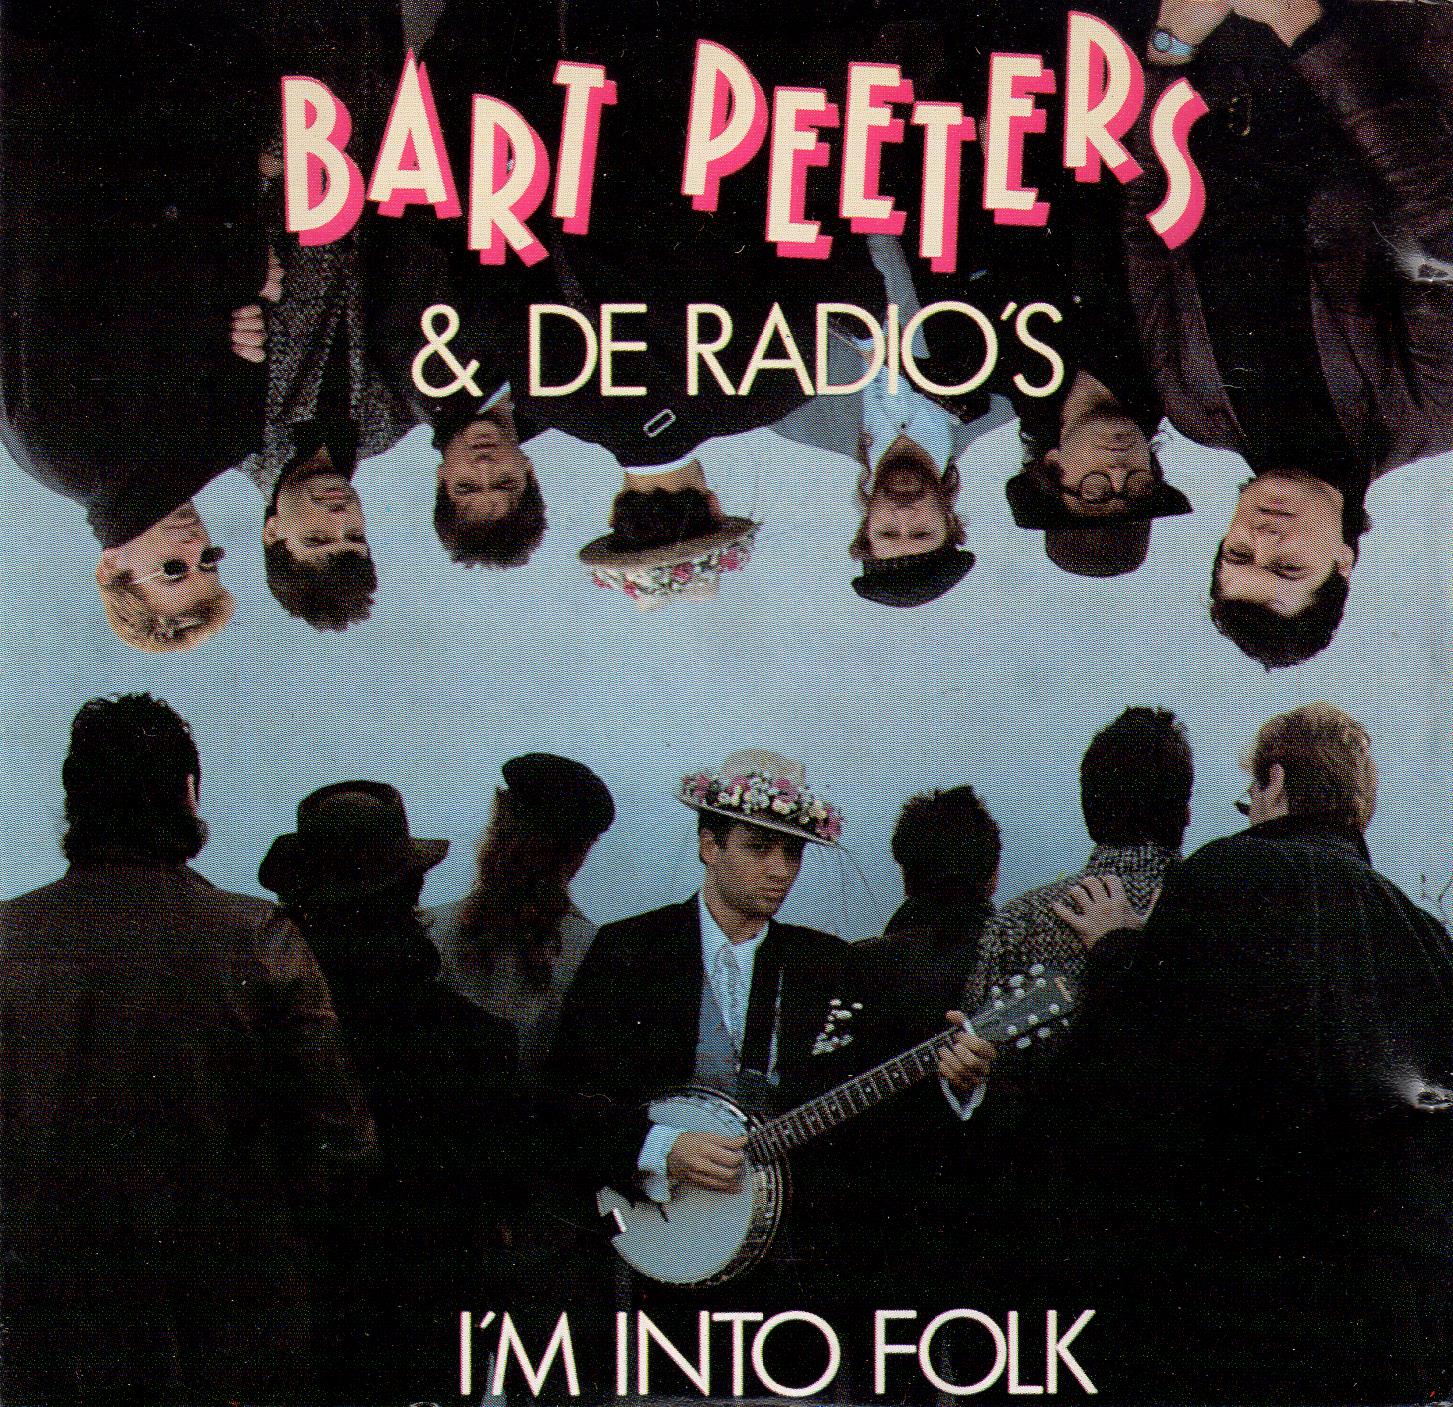 Bart Peeters & De Radio's - I'm Into Folk (Cds)[1988]